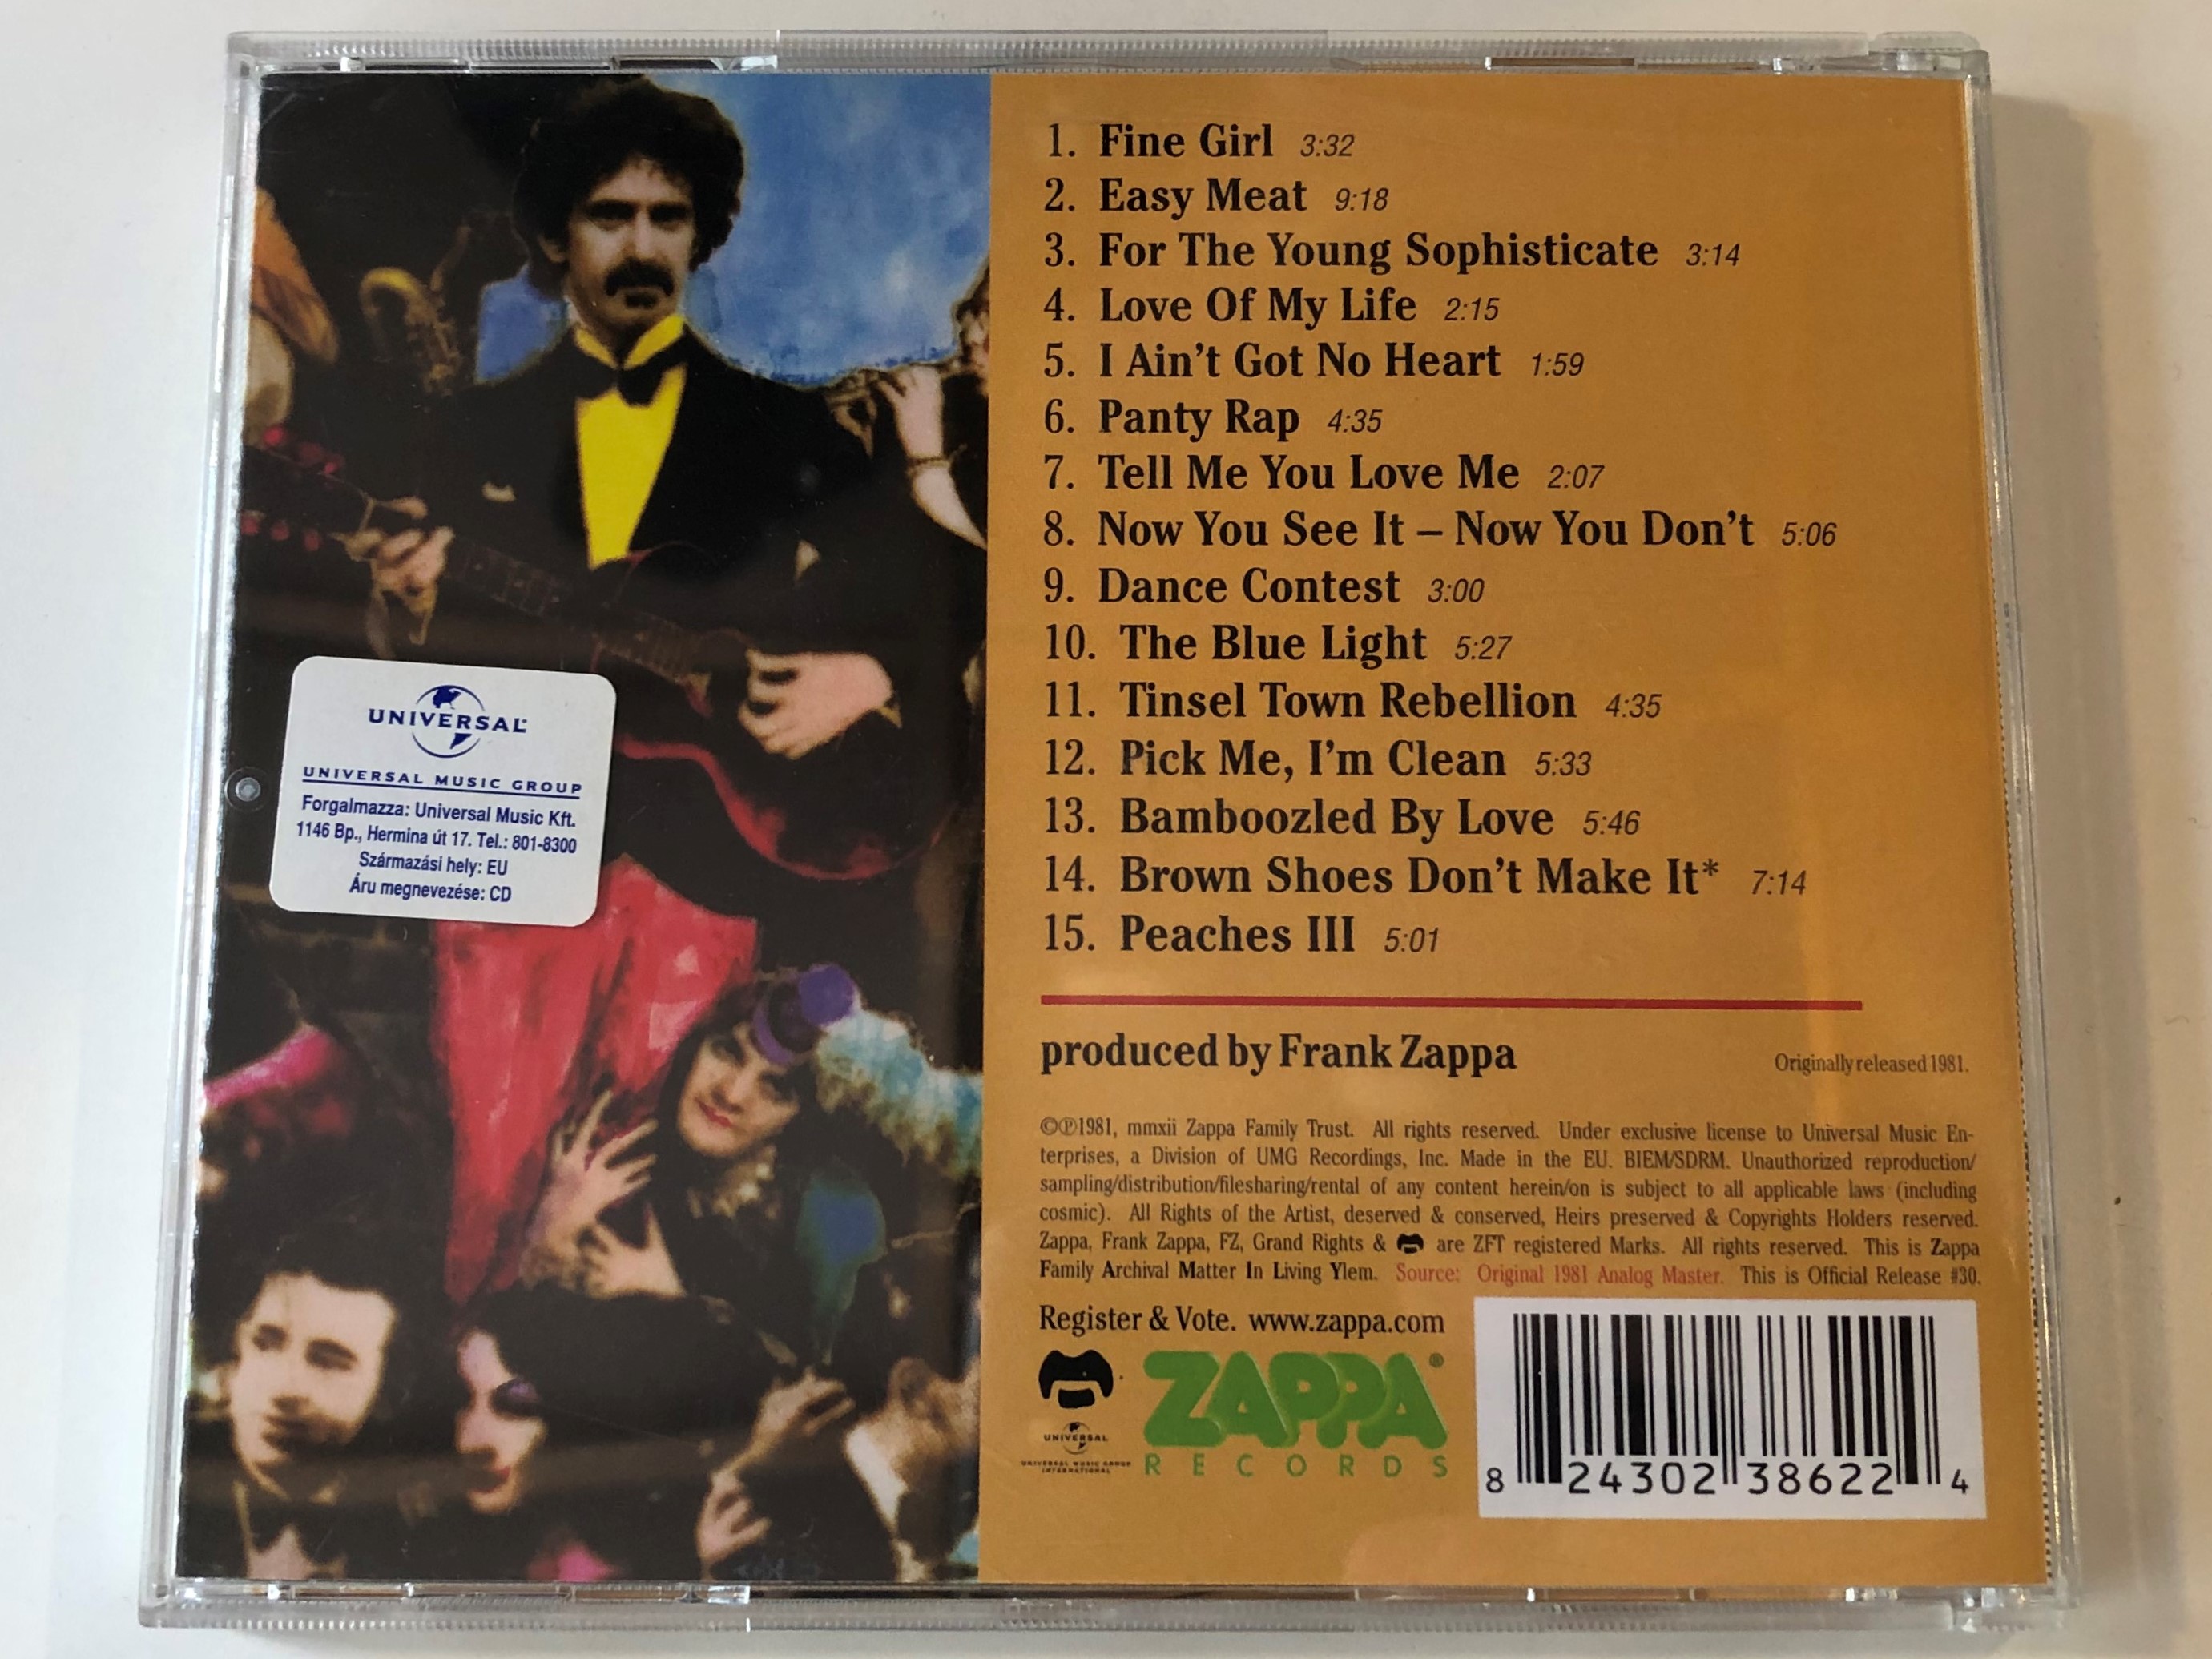 frank-zappa-tinseltown-rebellion-zappa-records-audio-cd-824302386224-2-.jpg